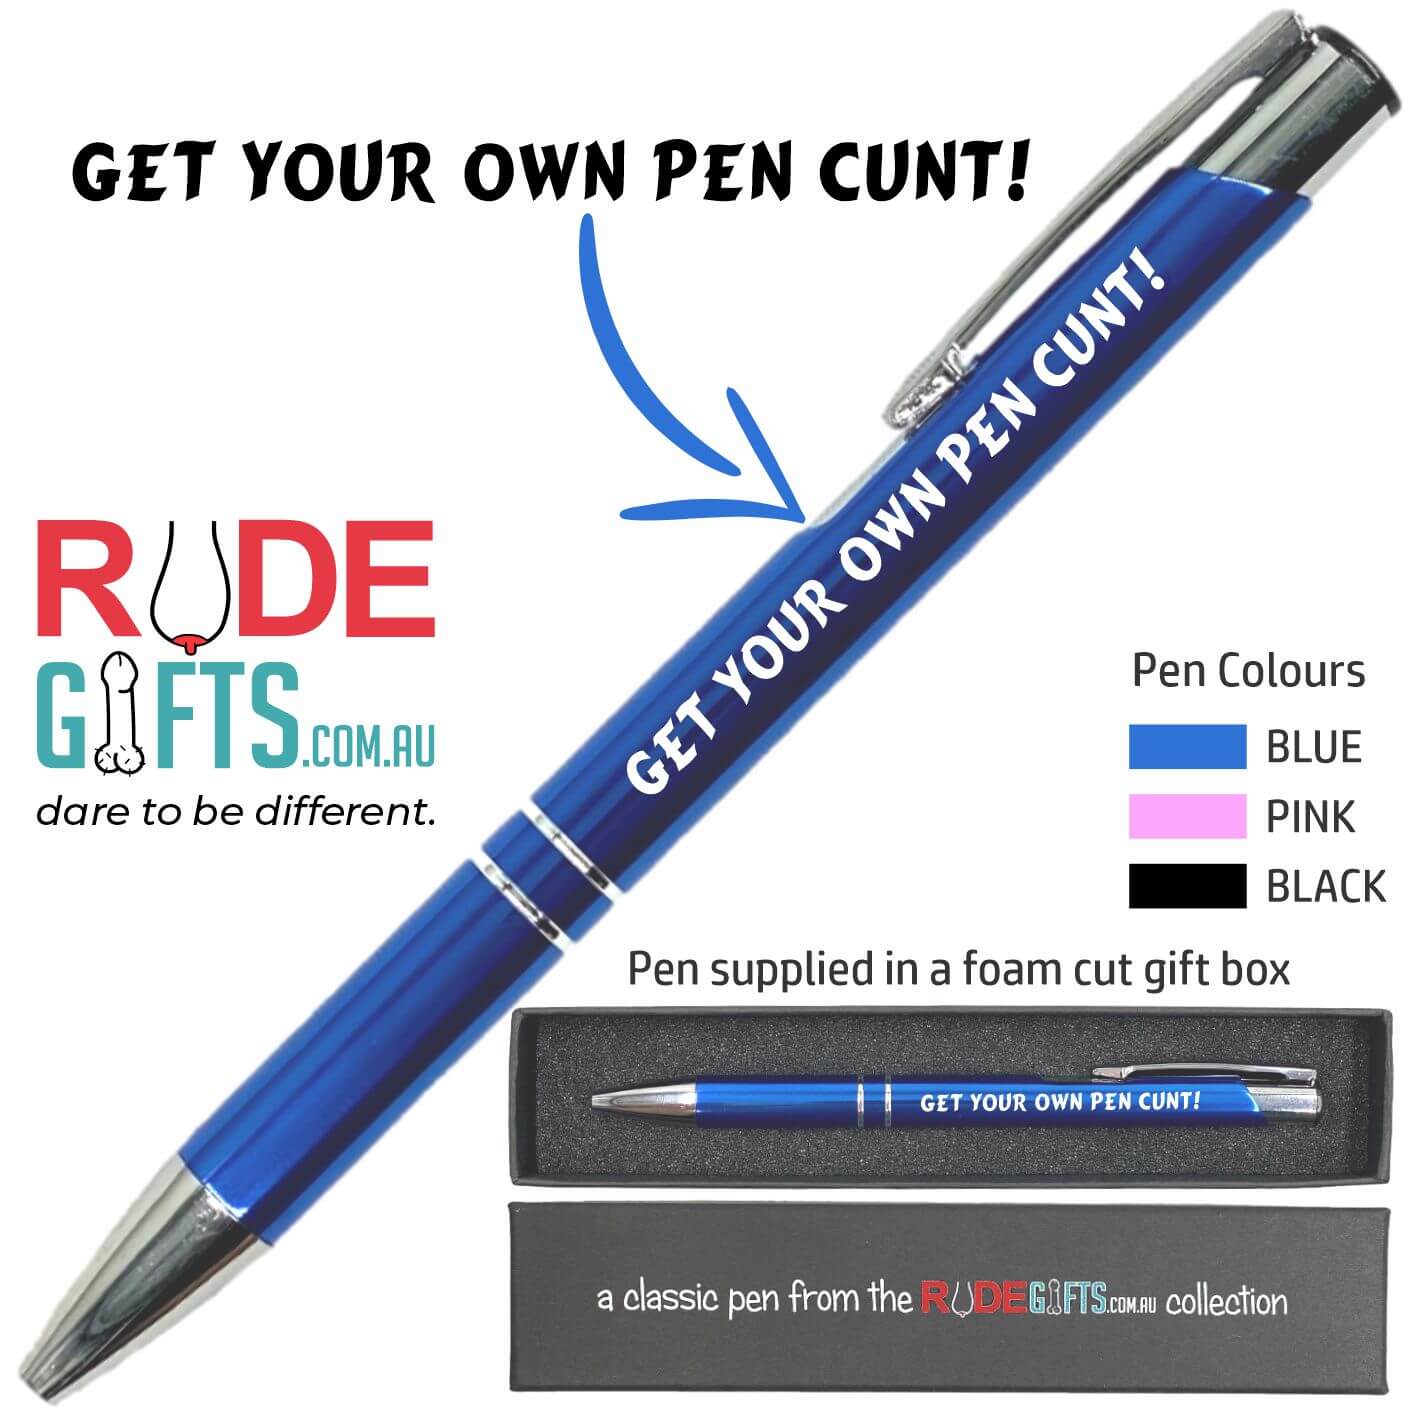 Get your own pen cunt!